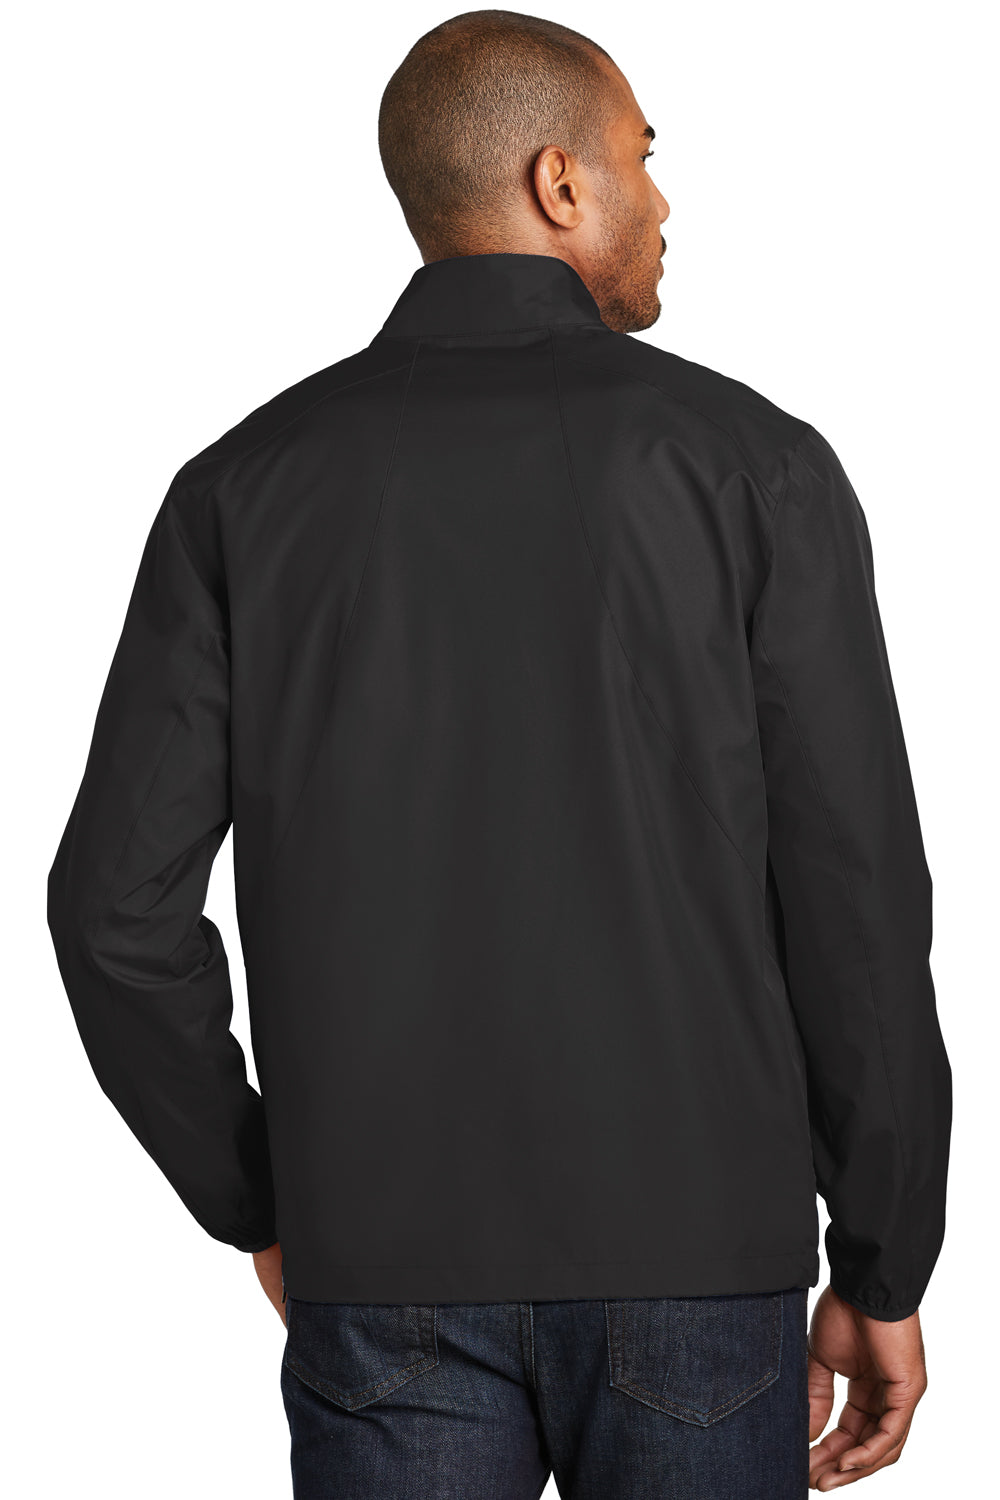 Port Authority J343 Mens Zephyr Wind & Water Resistant 1/4 Zip Jacket Black Back